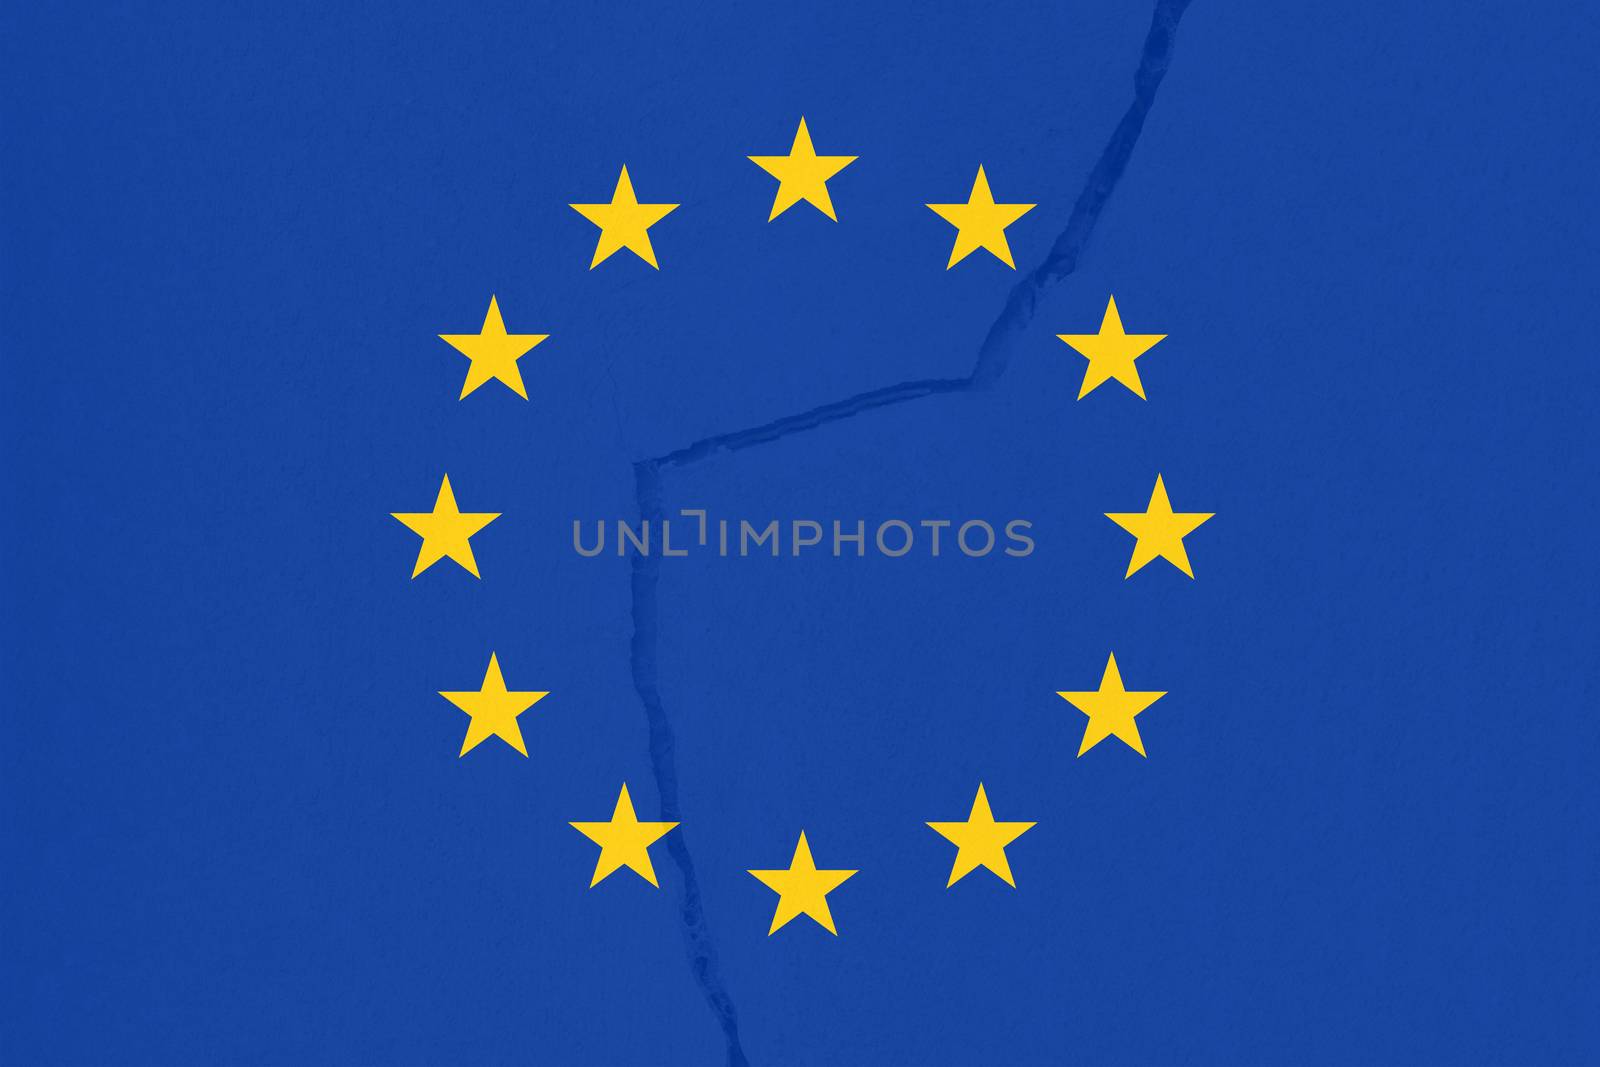 Europe flag, Europe is breaking symbolically